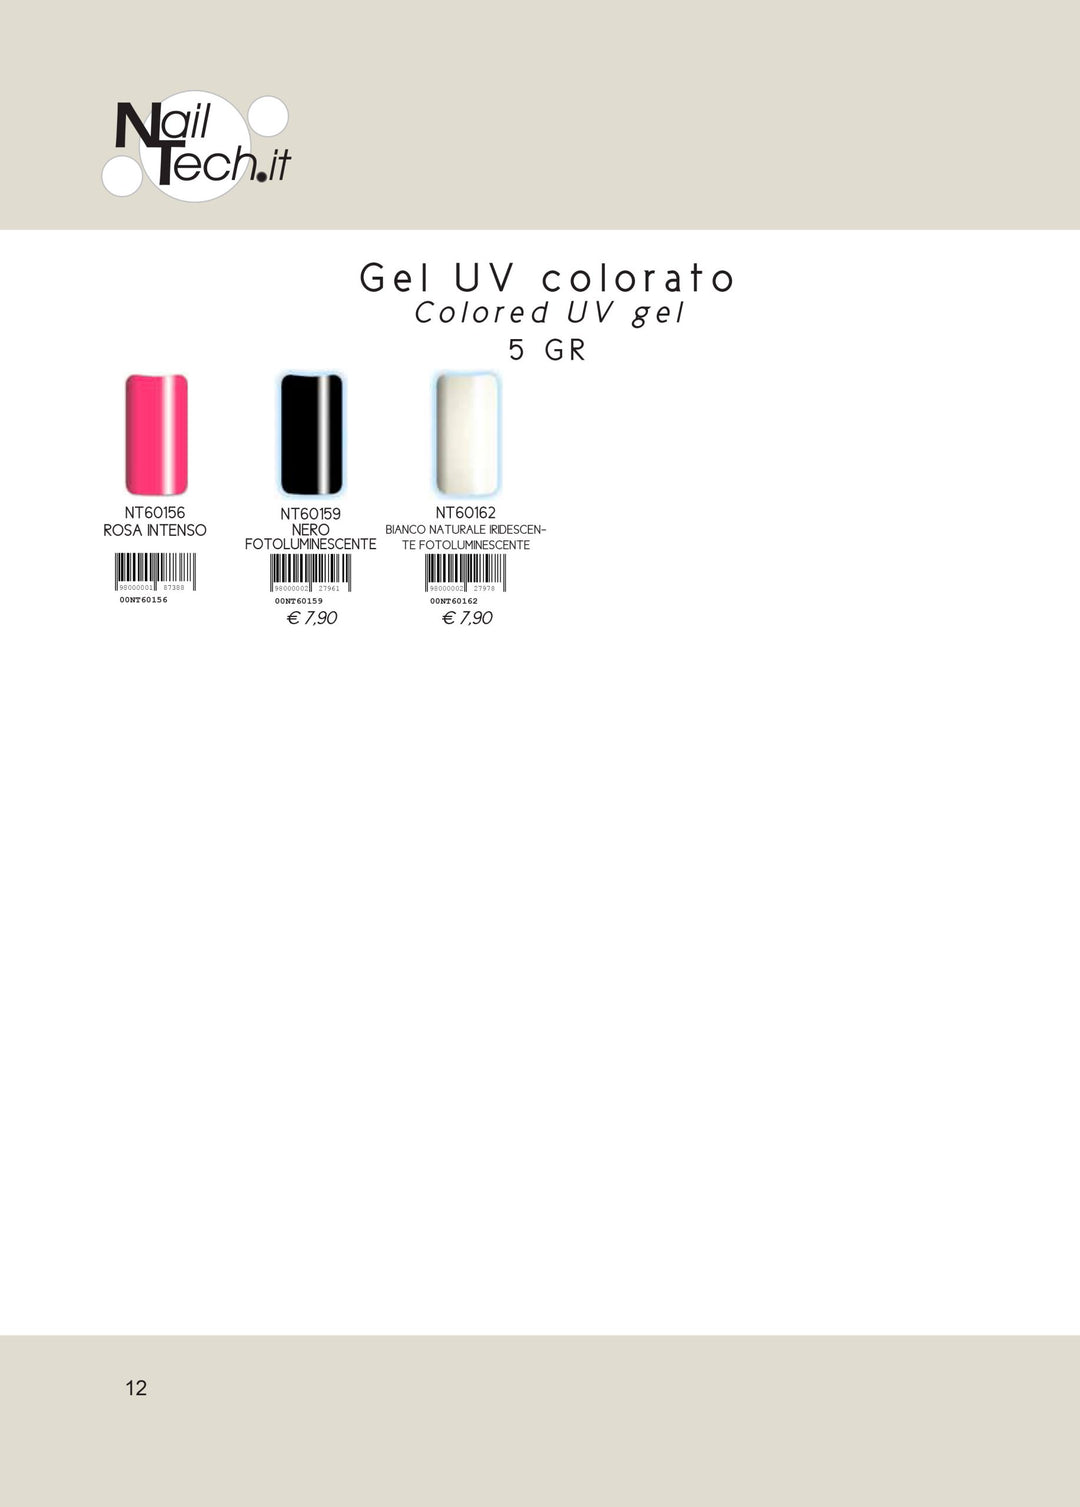 Nail Tech Color Up Gel Uv Colorato 5 gr